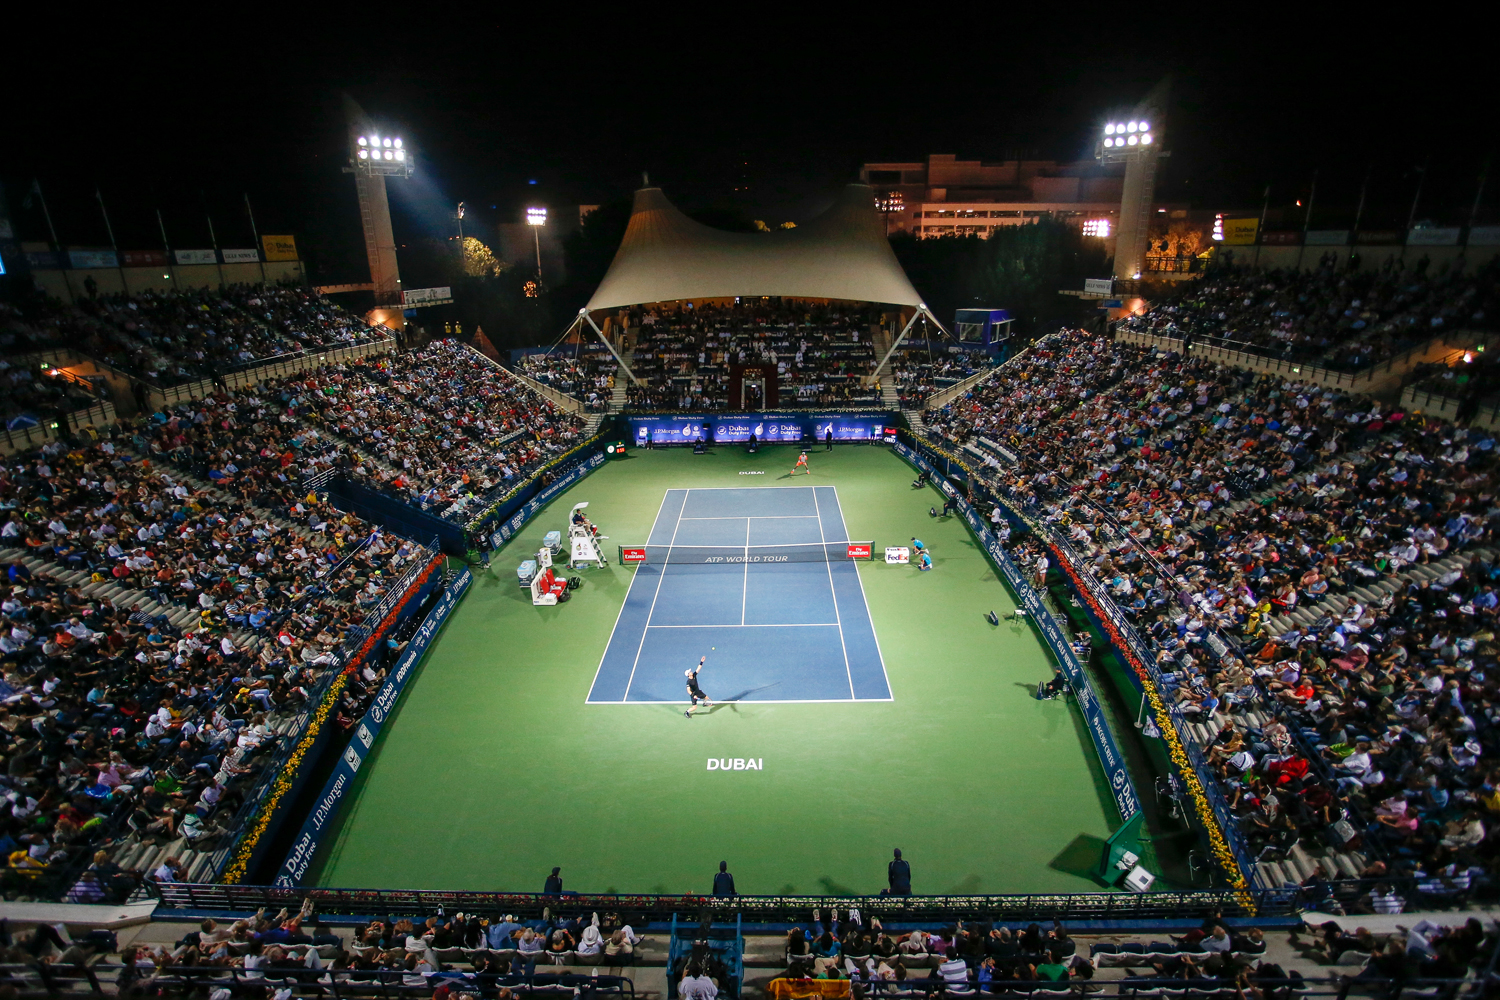 About the tournament - Dubai Duty Free Tennis Championships